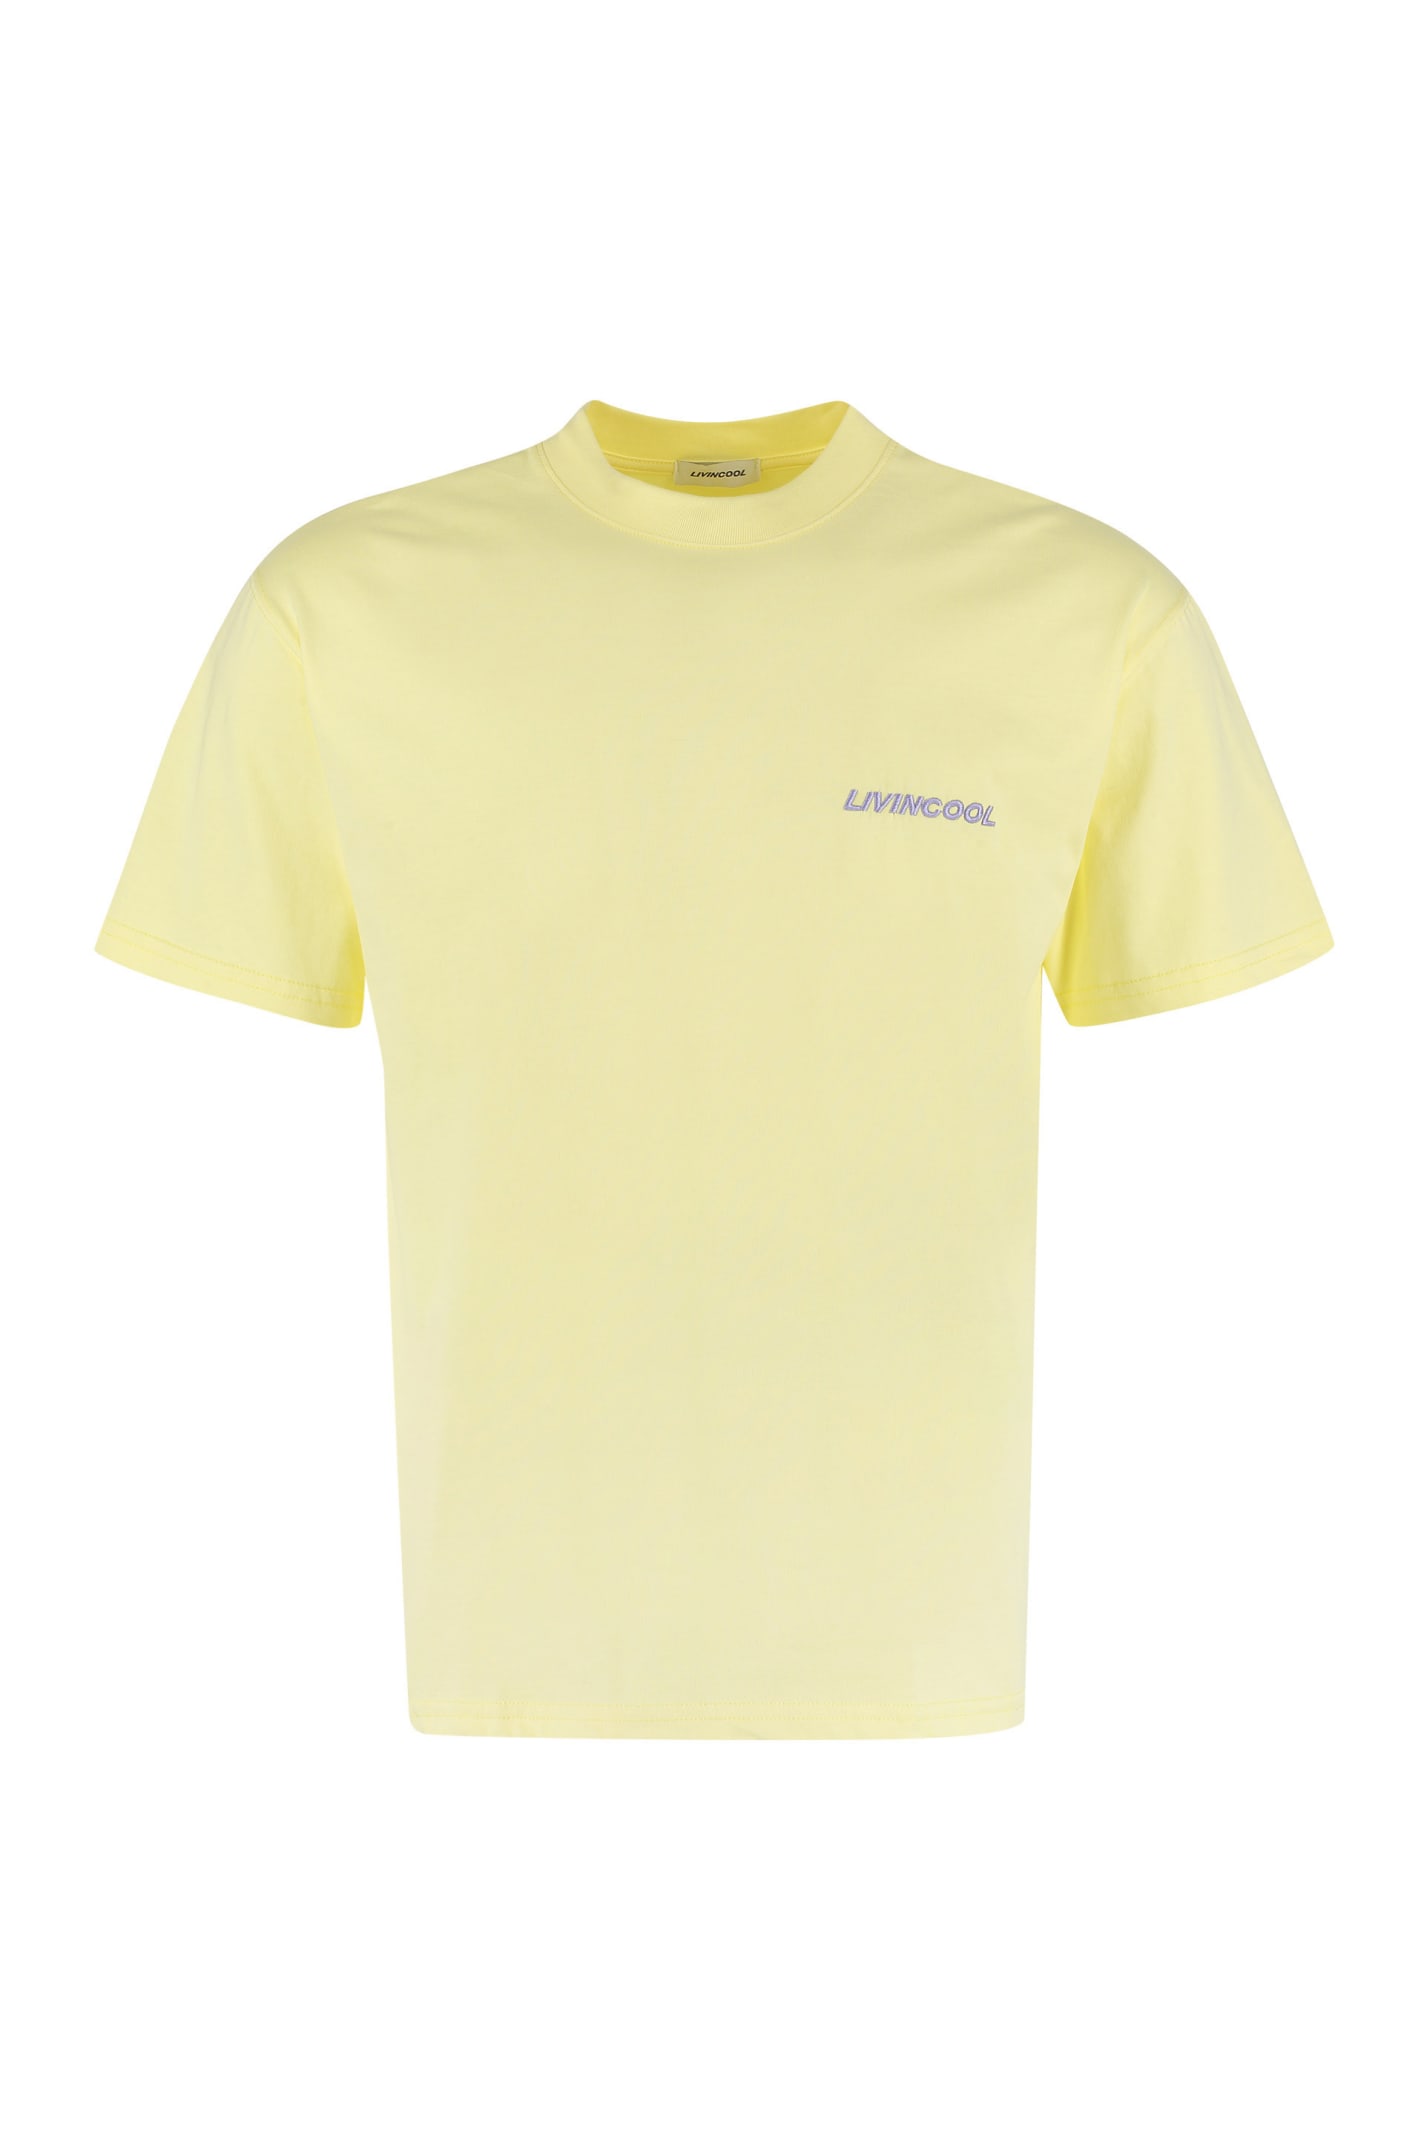 Livincool Logo Cotton T-shirt In Yellow